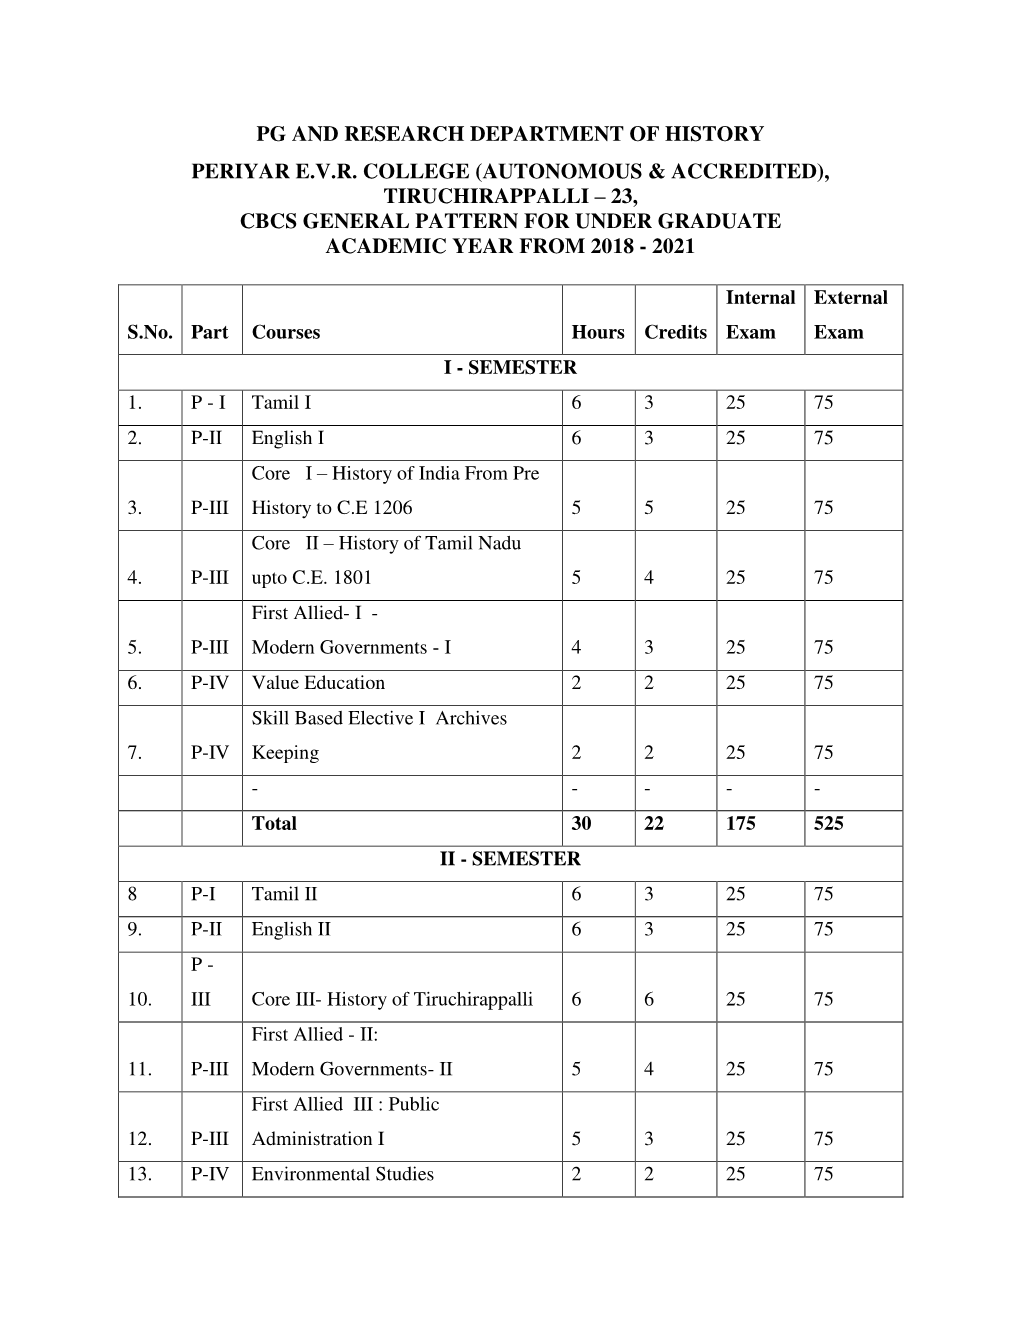 Tiruchirappalli – 23, Cbcs General Pattern for Under Graduate Academic Year from 2018 - 2021